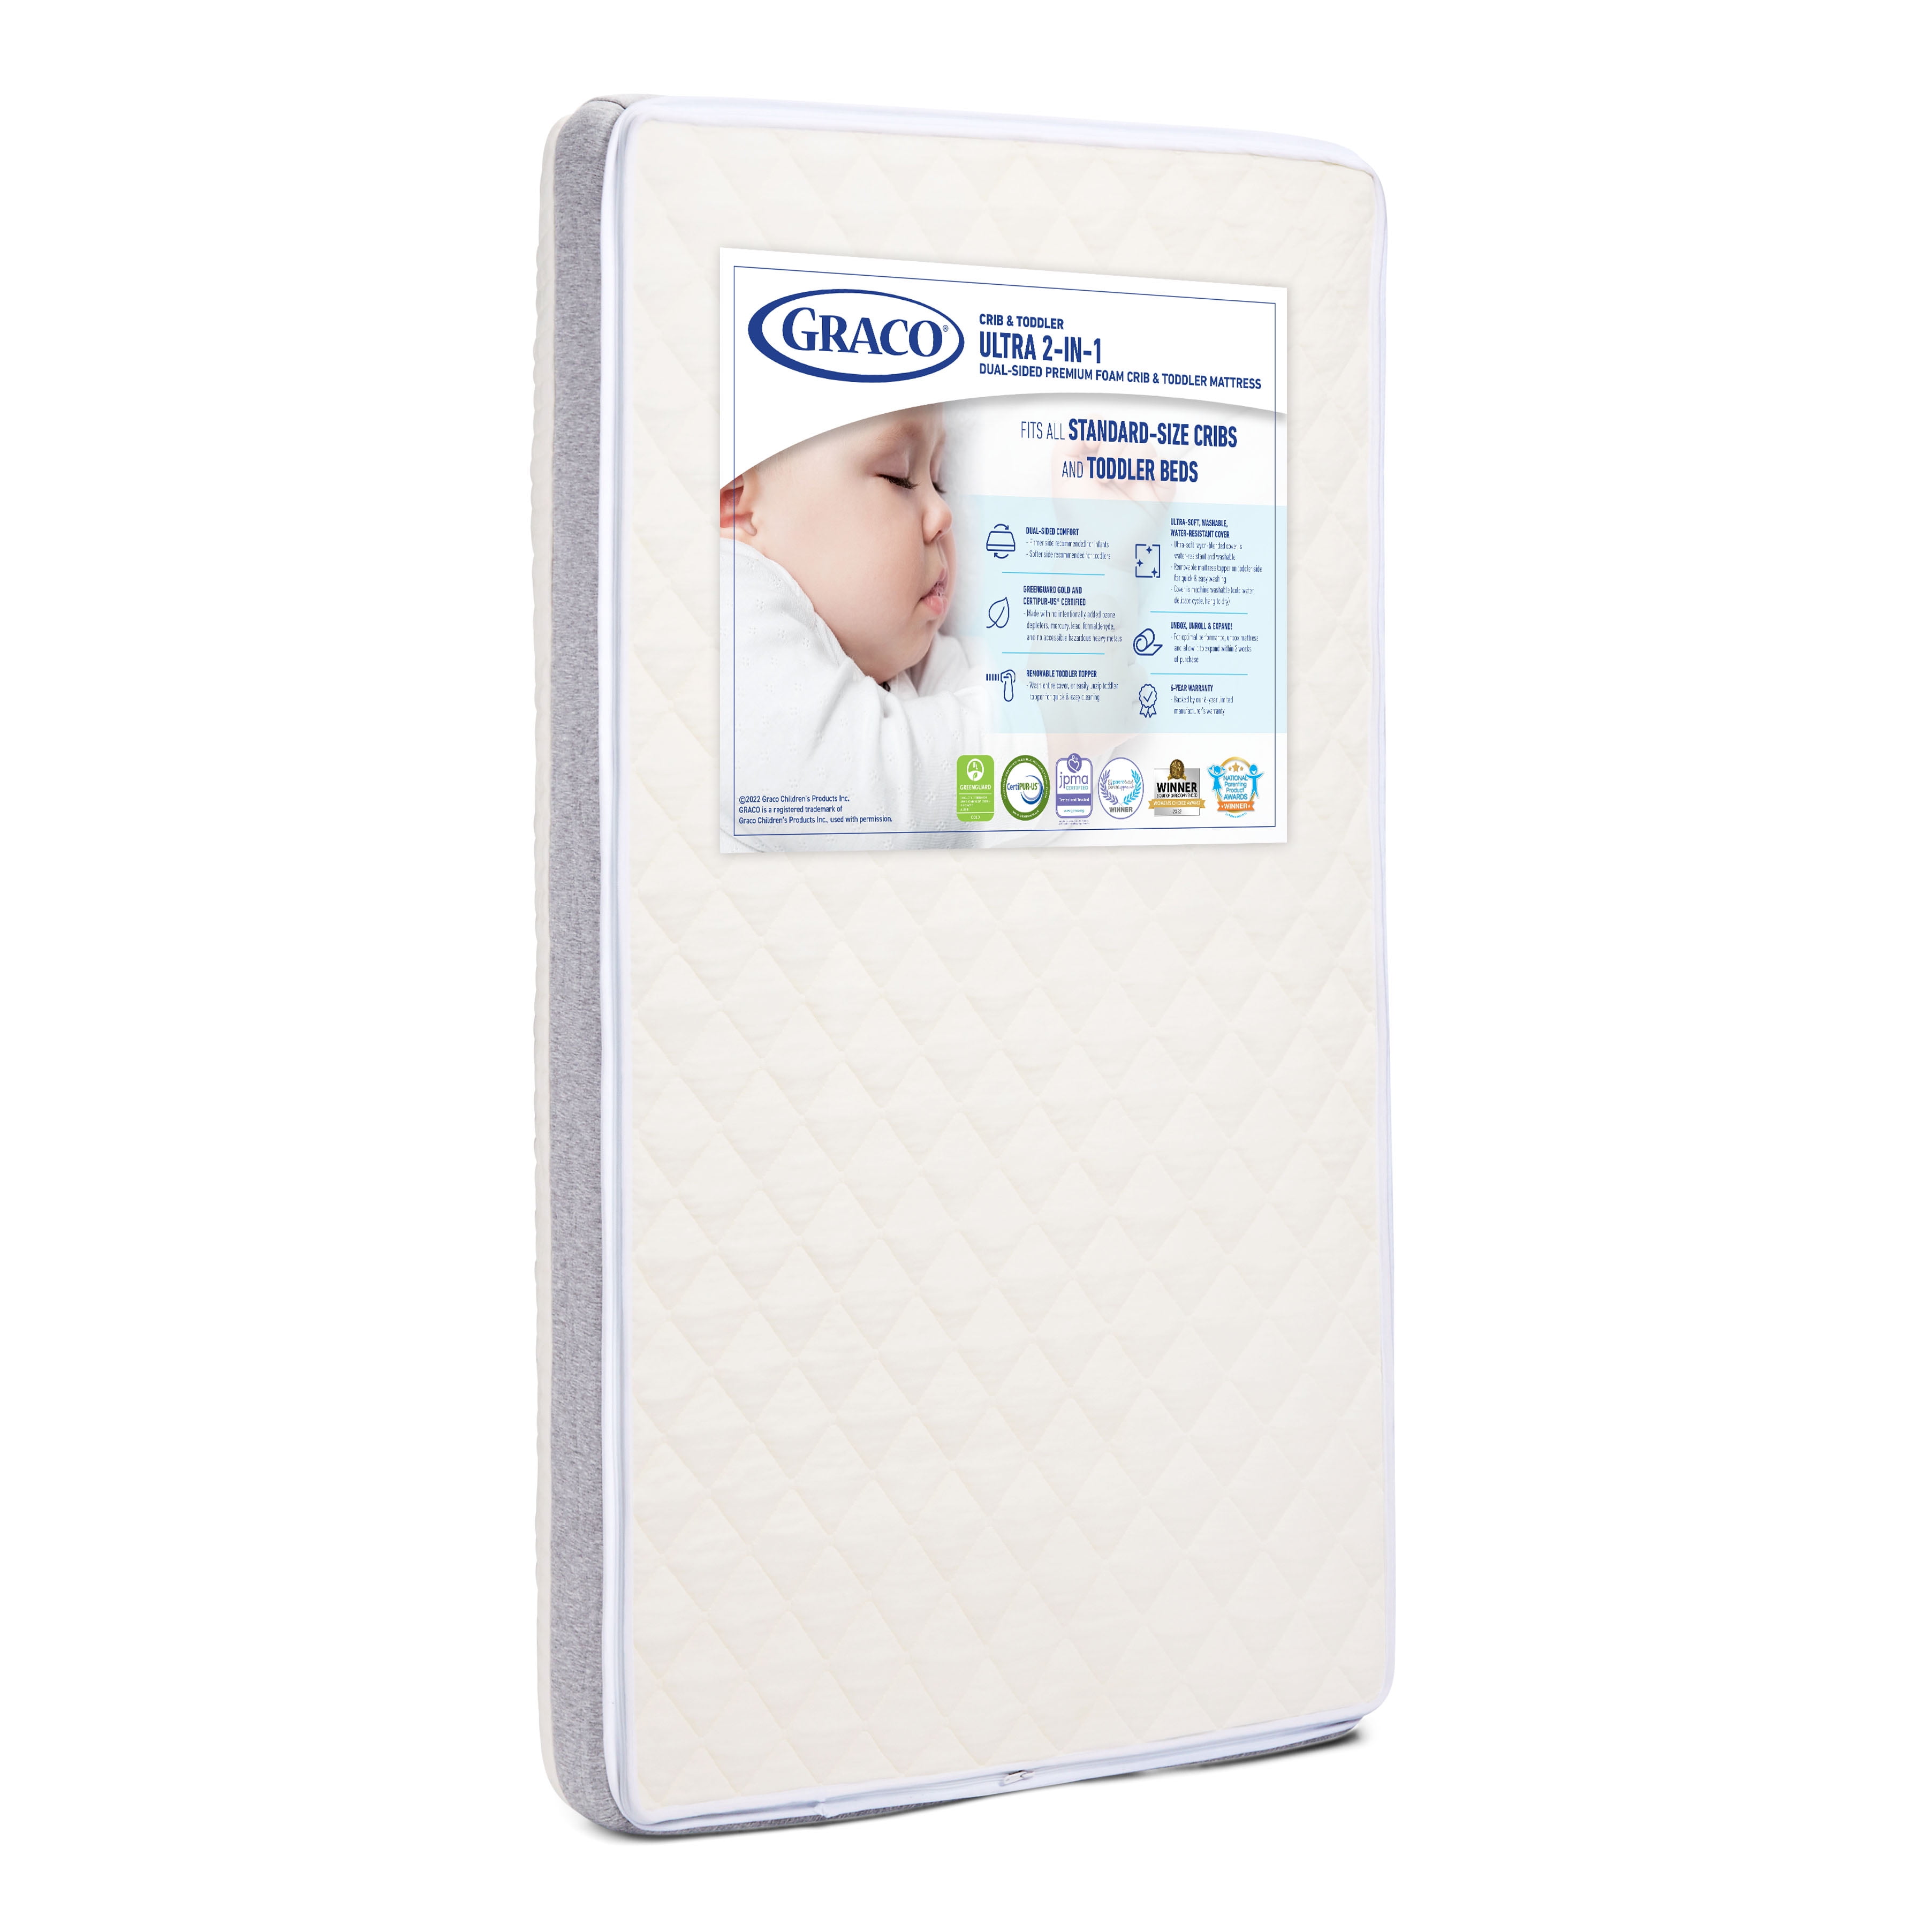 Water Resistant Breathable Foam Graco Premium Foam Crib & Toddler Bed Mattress 